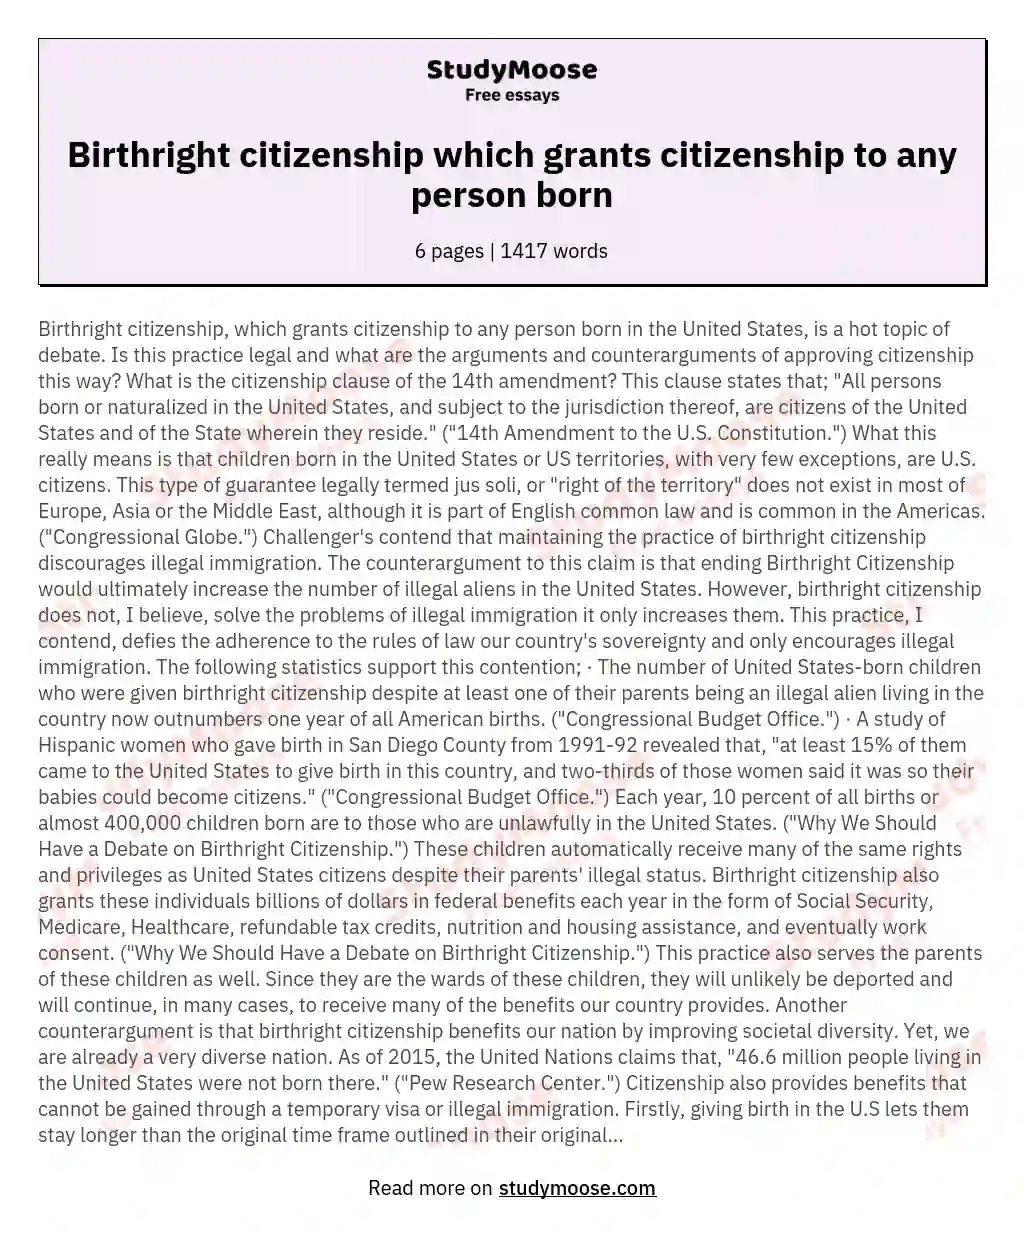 Birthright citizenship which grants citizenship to any person born